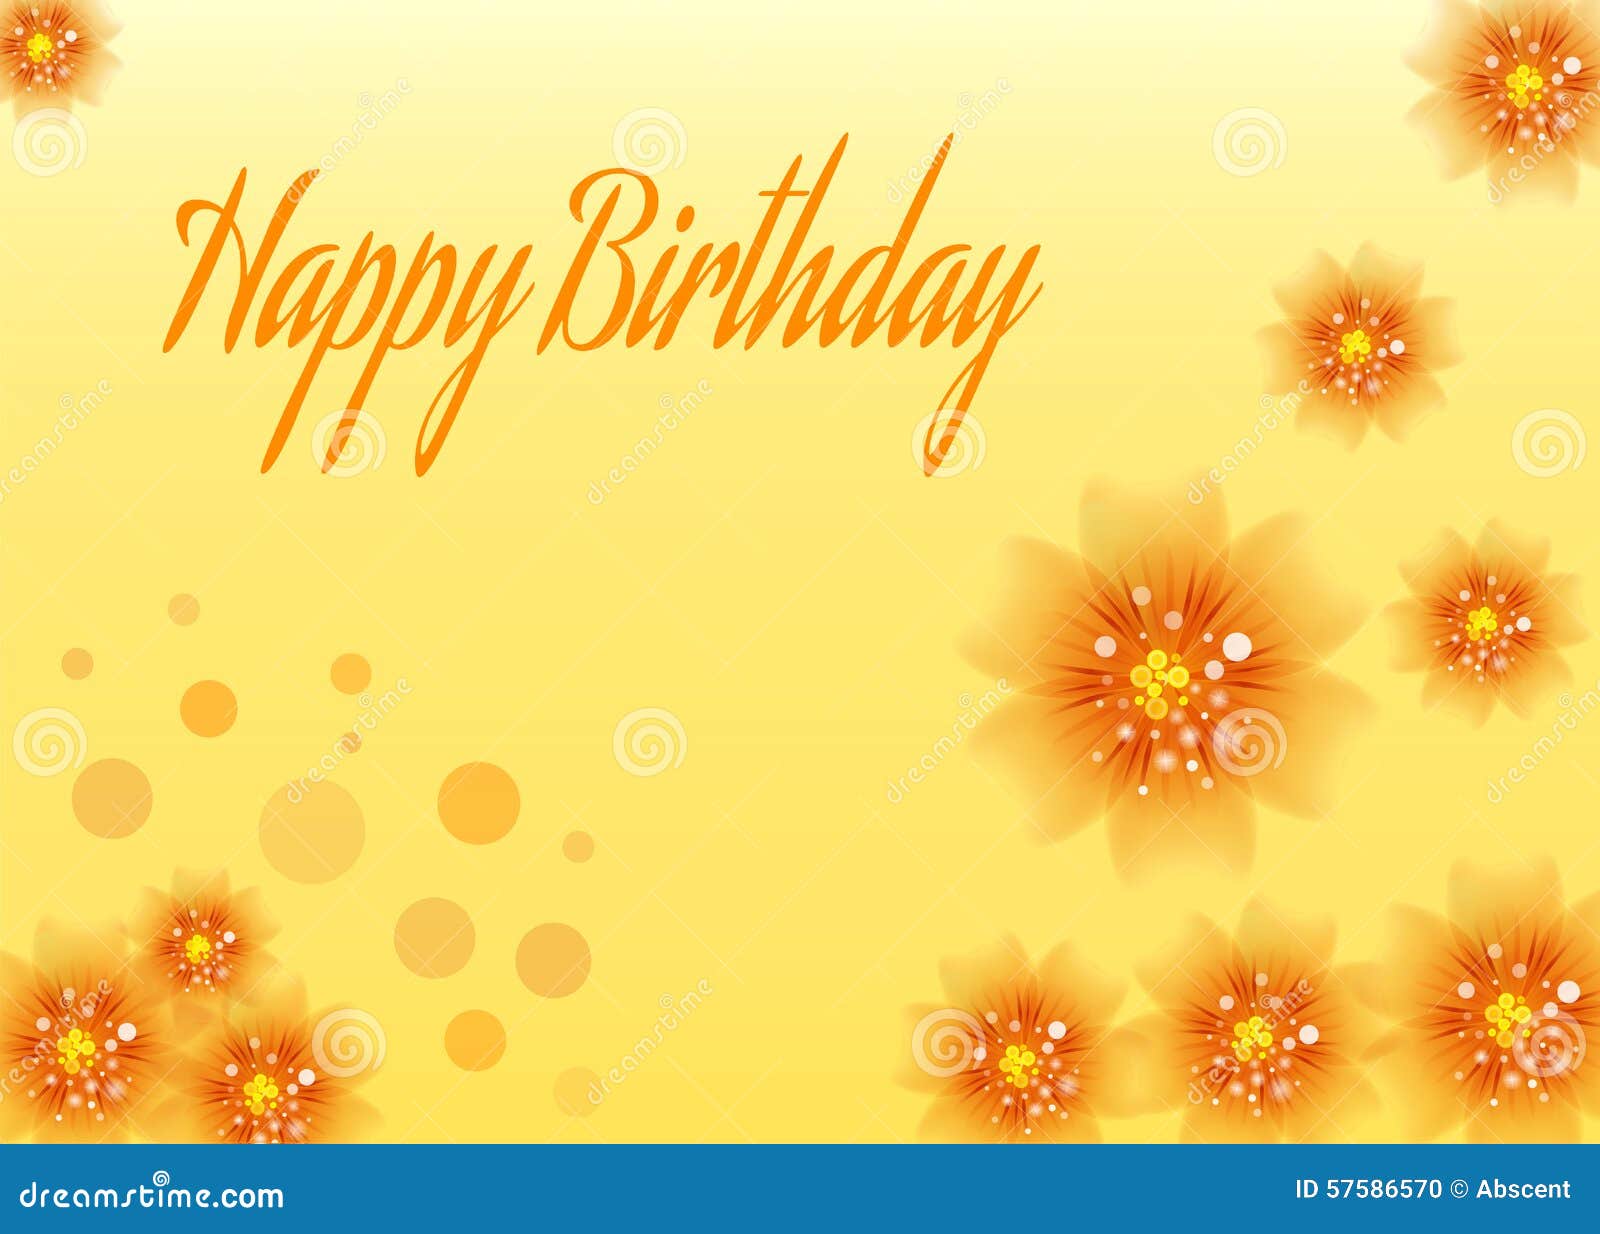 Birthday floral card stock vector. Illustration of invitation - 57586570